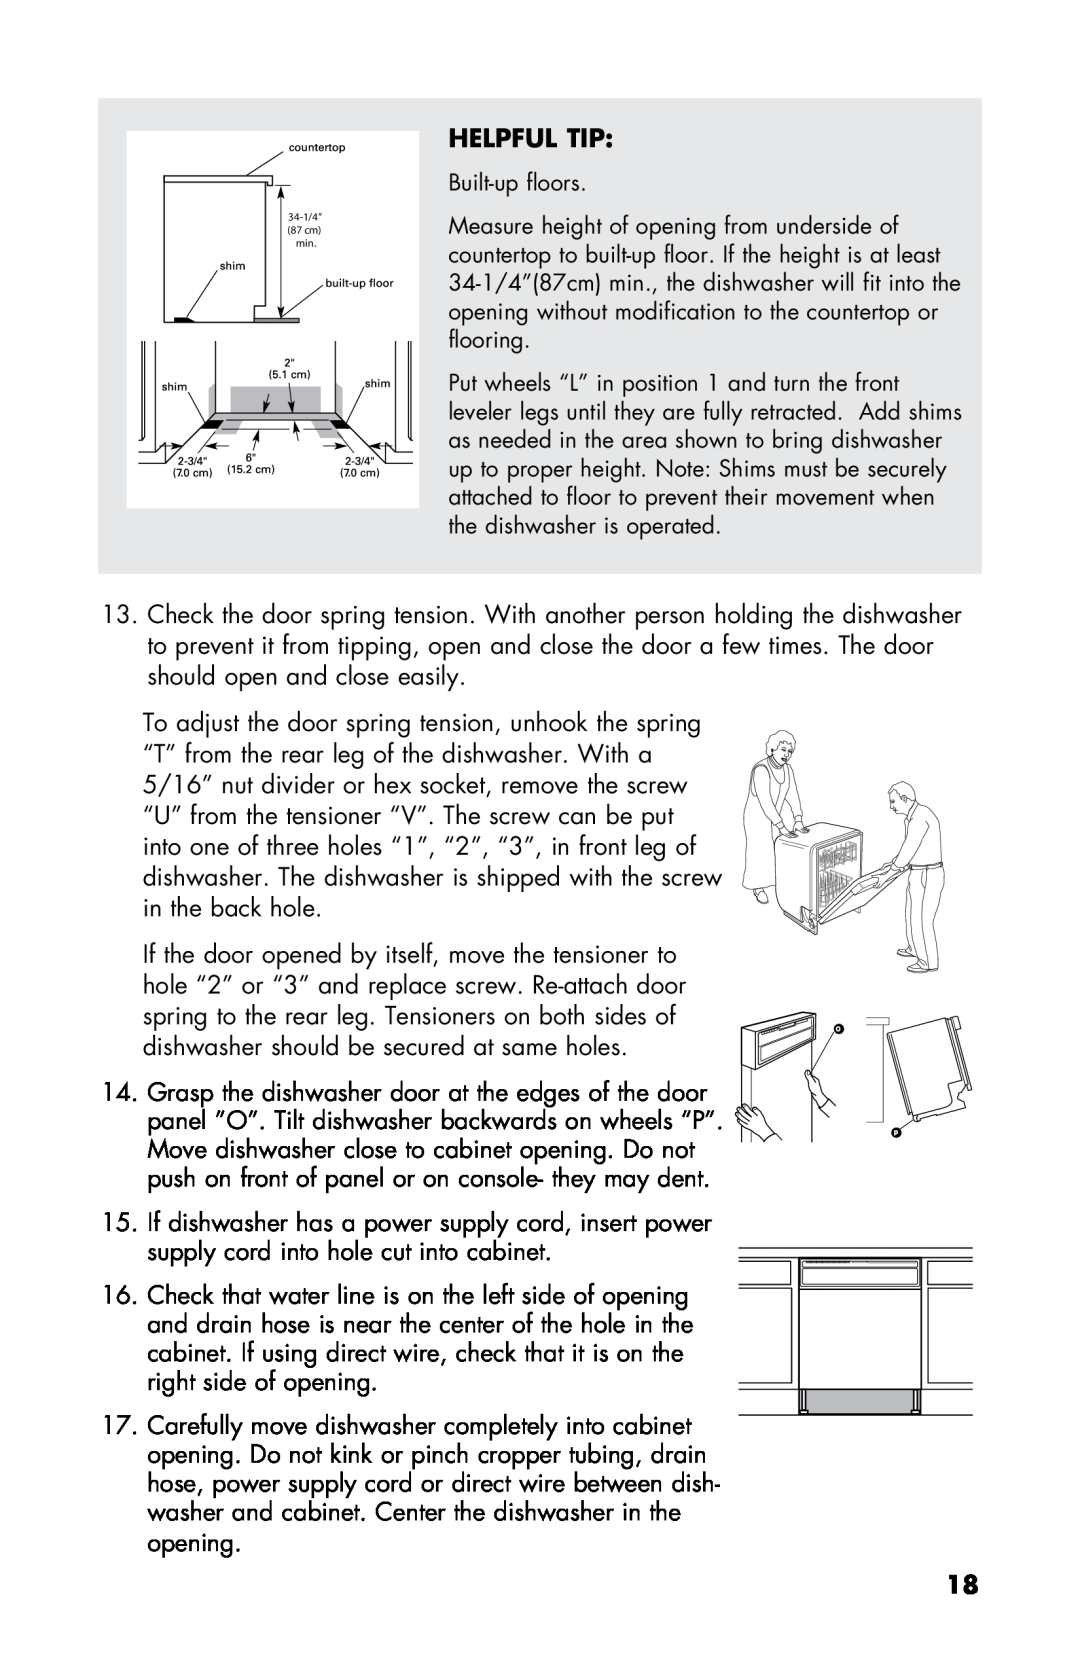 Haier DW-7777-01 manual Helpful Tip 